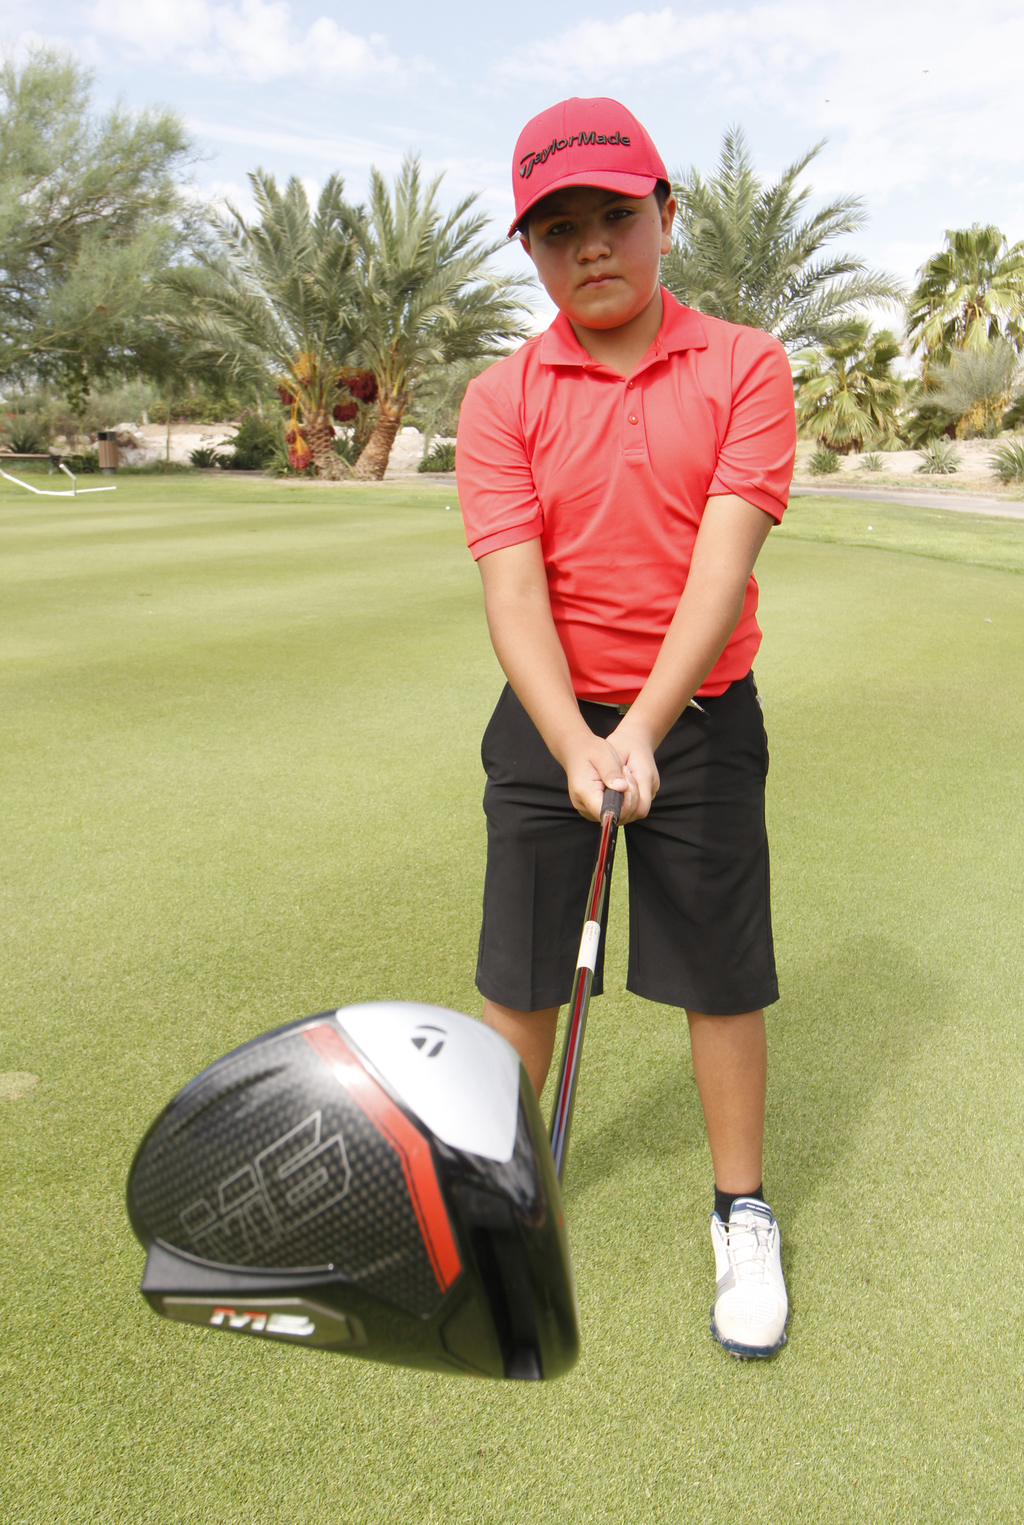 Lagunero, rumbo al Mundial infantil de golf